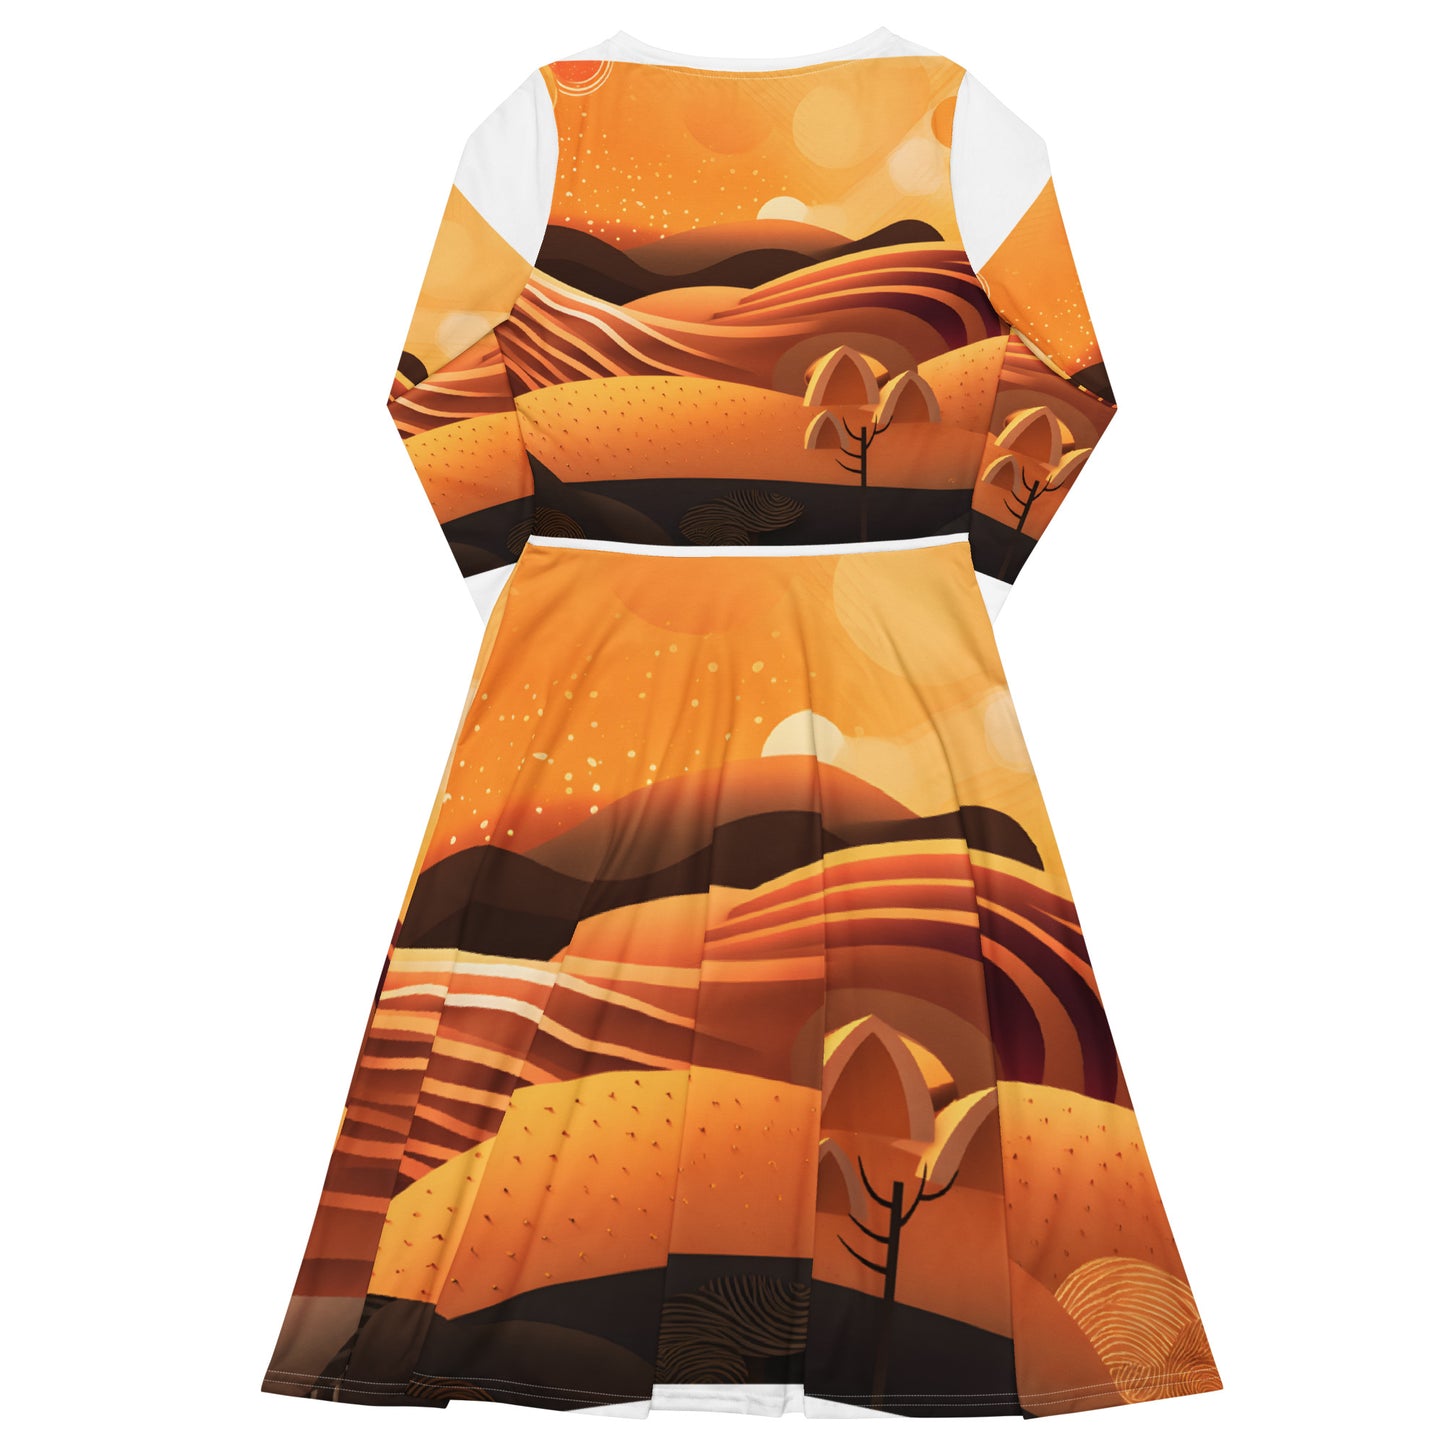 All-over print long sleeve midi dress